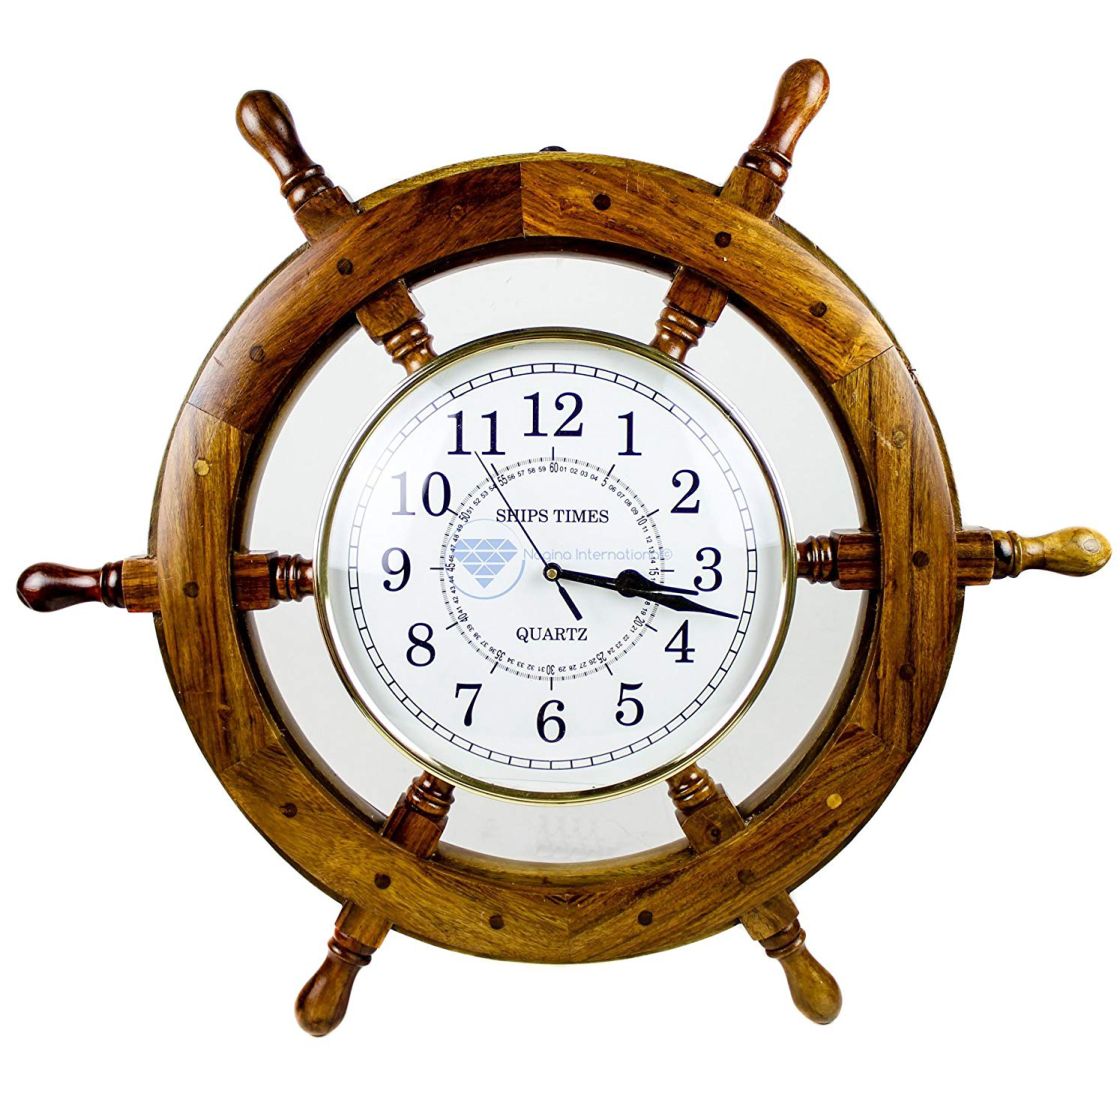 Nagina International Time's Wall Clock | Nautical Pirate's Ship Wheel | Premium Craft Gift